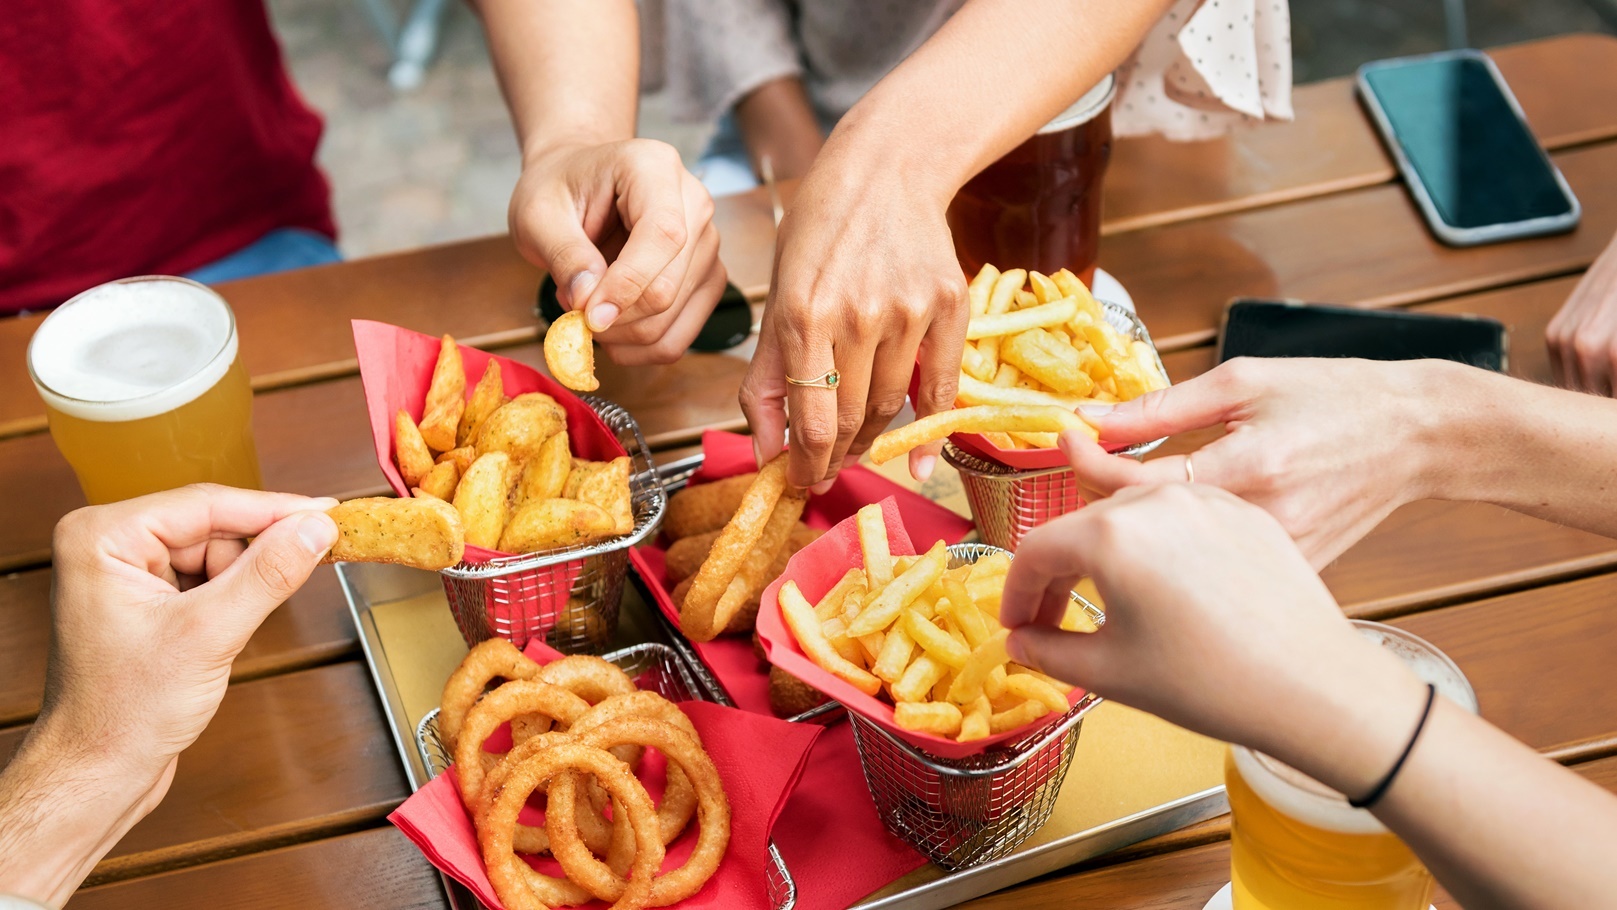 friends-eating-fries-in-pub-2021-10-05-18-15-24-utc